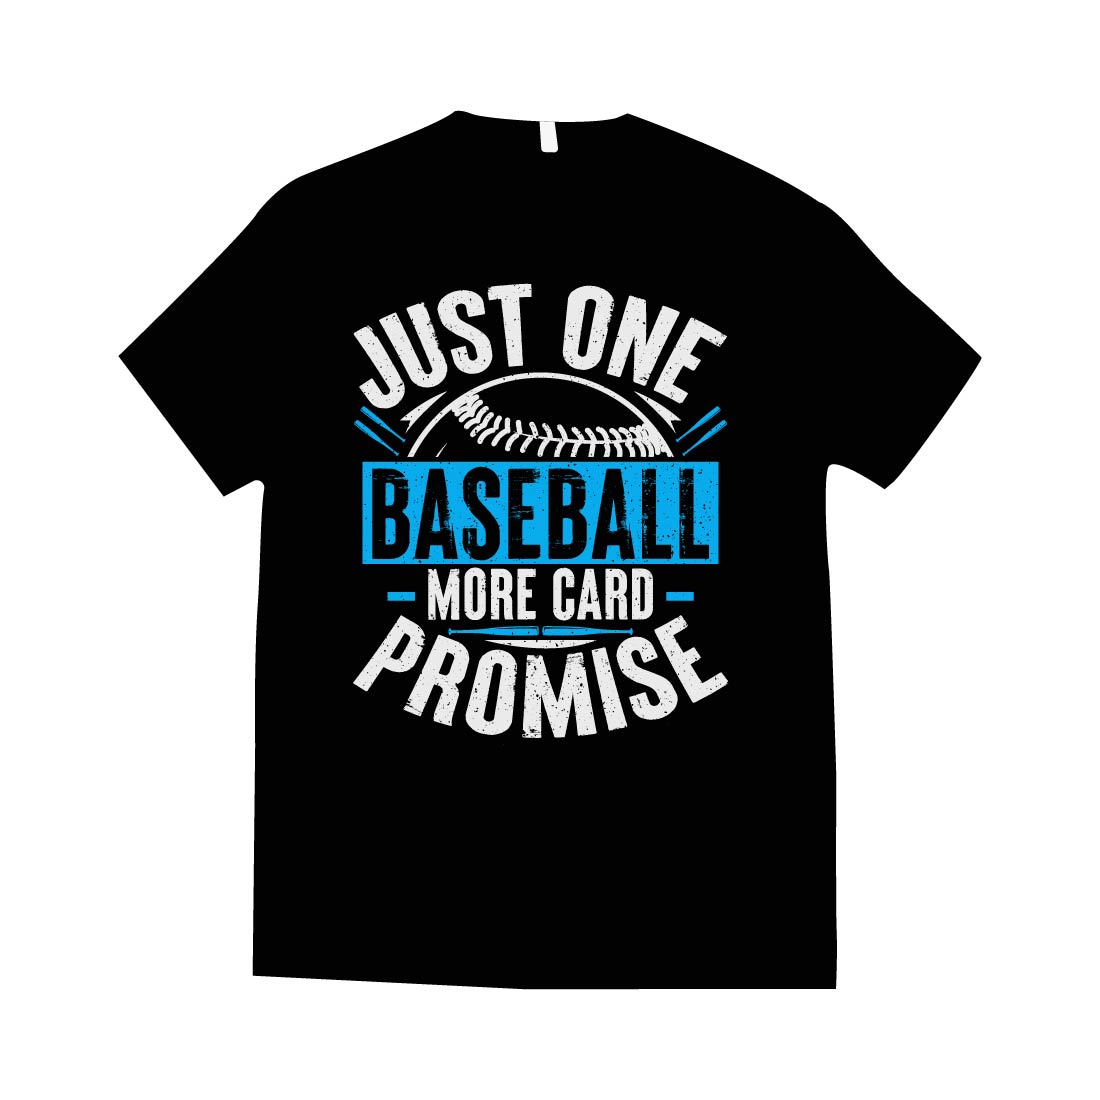 Baseball T-shirt Design preview image.